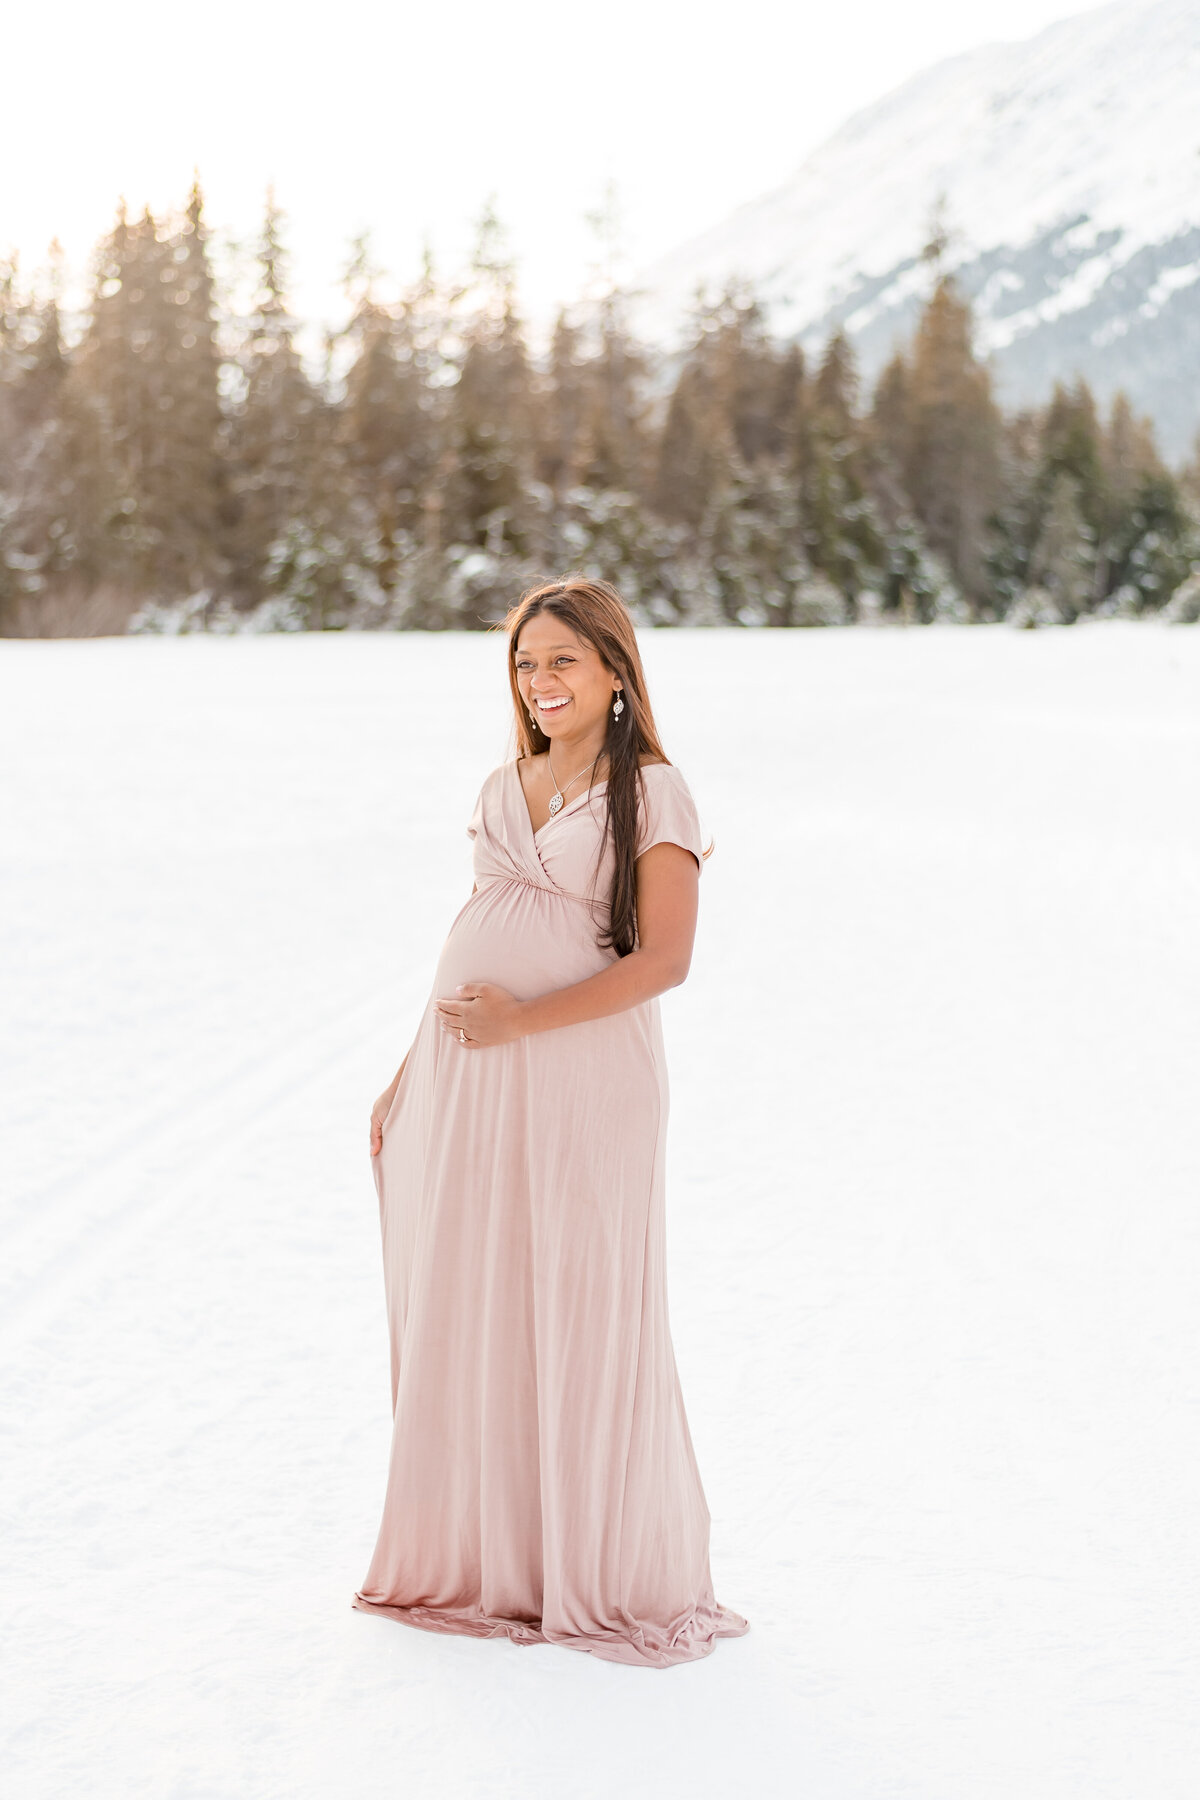 Alaska-Maternity-Photographer-15